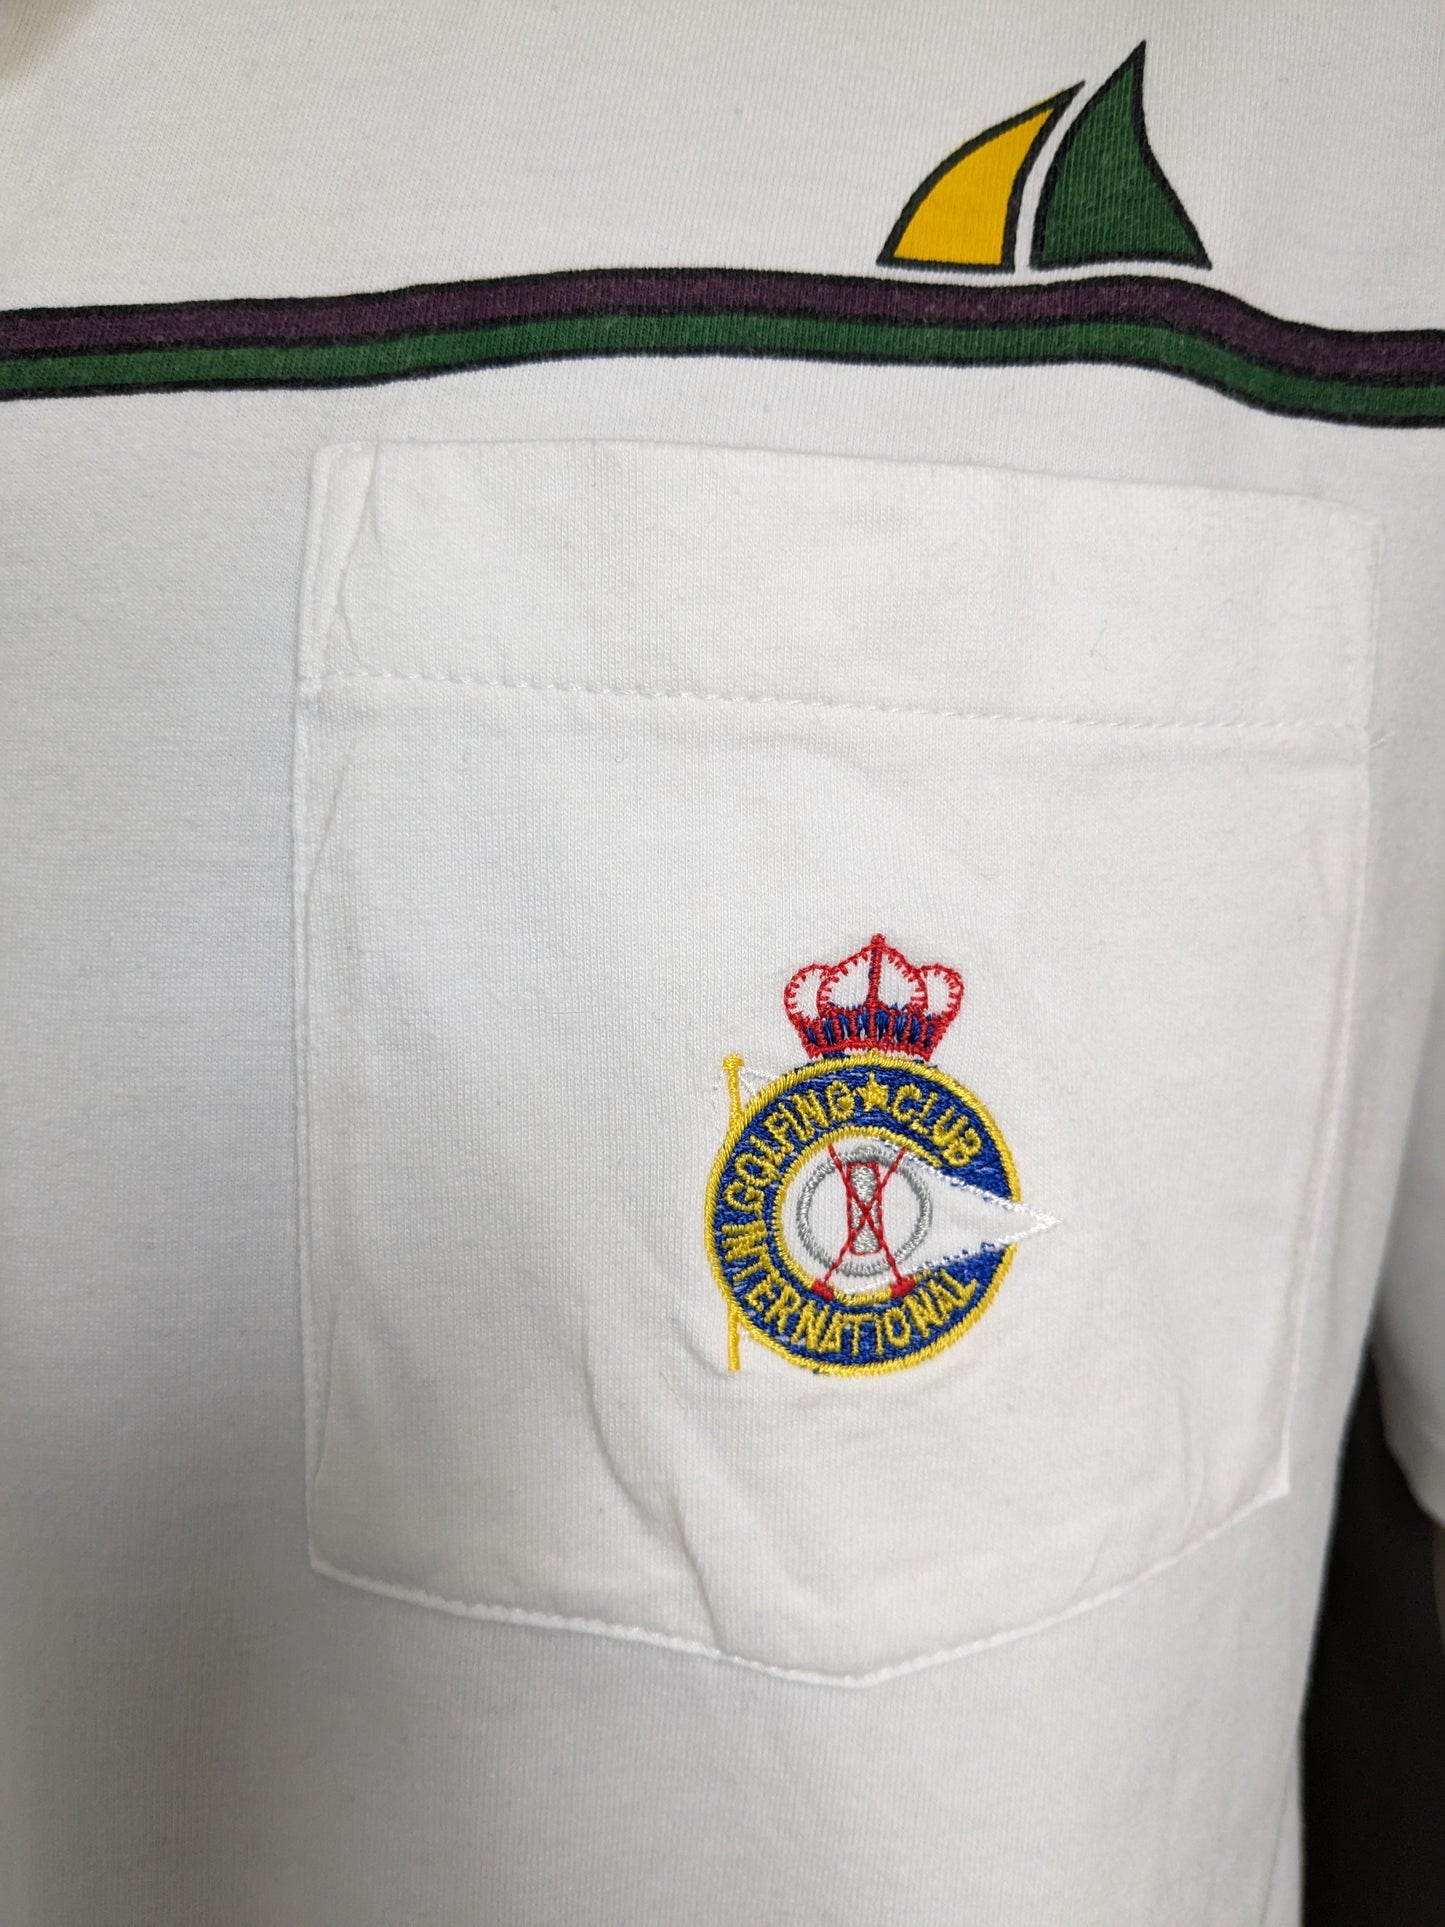 Bosi Sports Polo vintage. "International Golfing Club". Blanc avec imprimé. Taille xl.